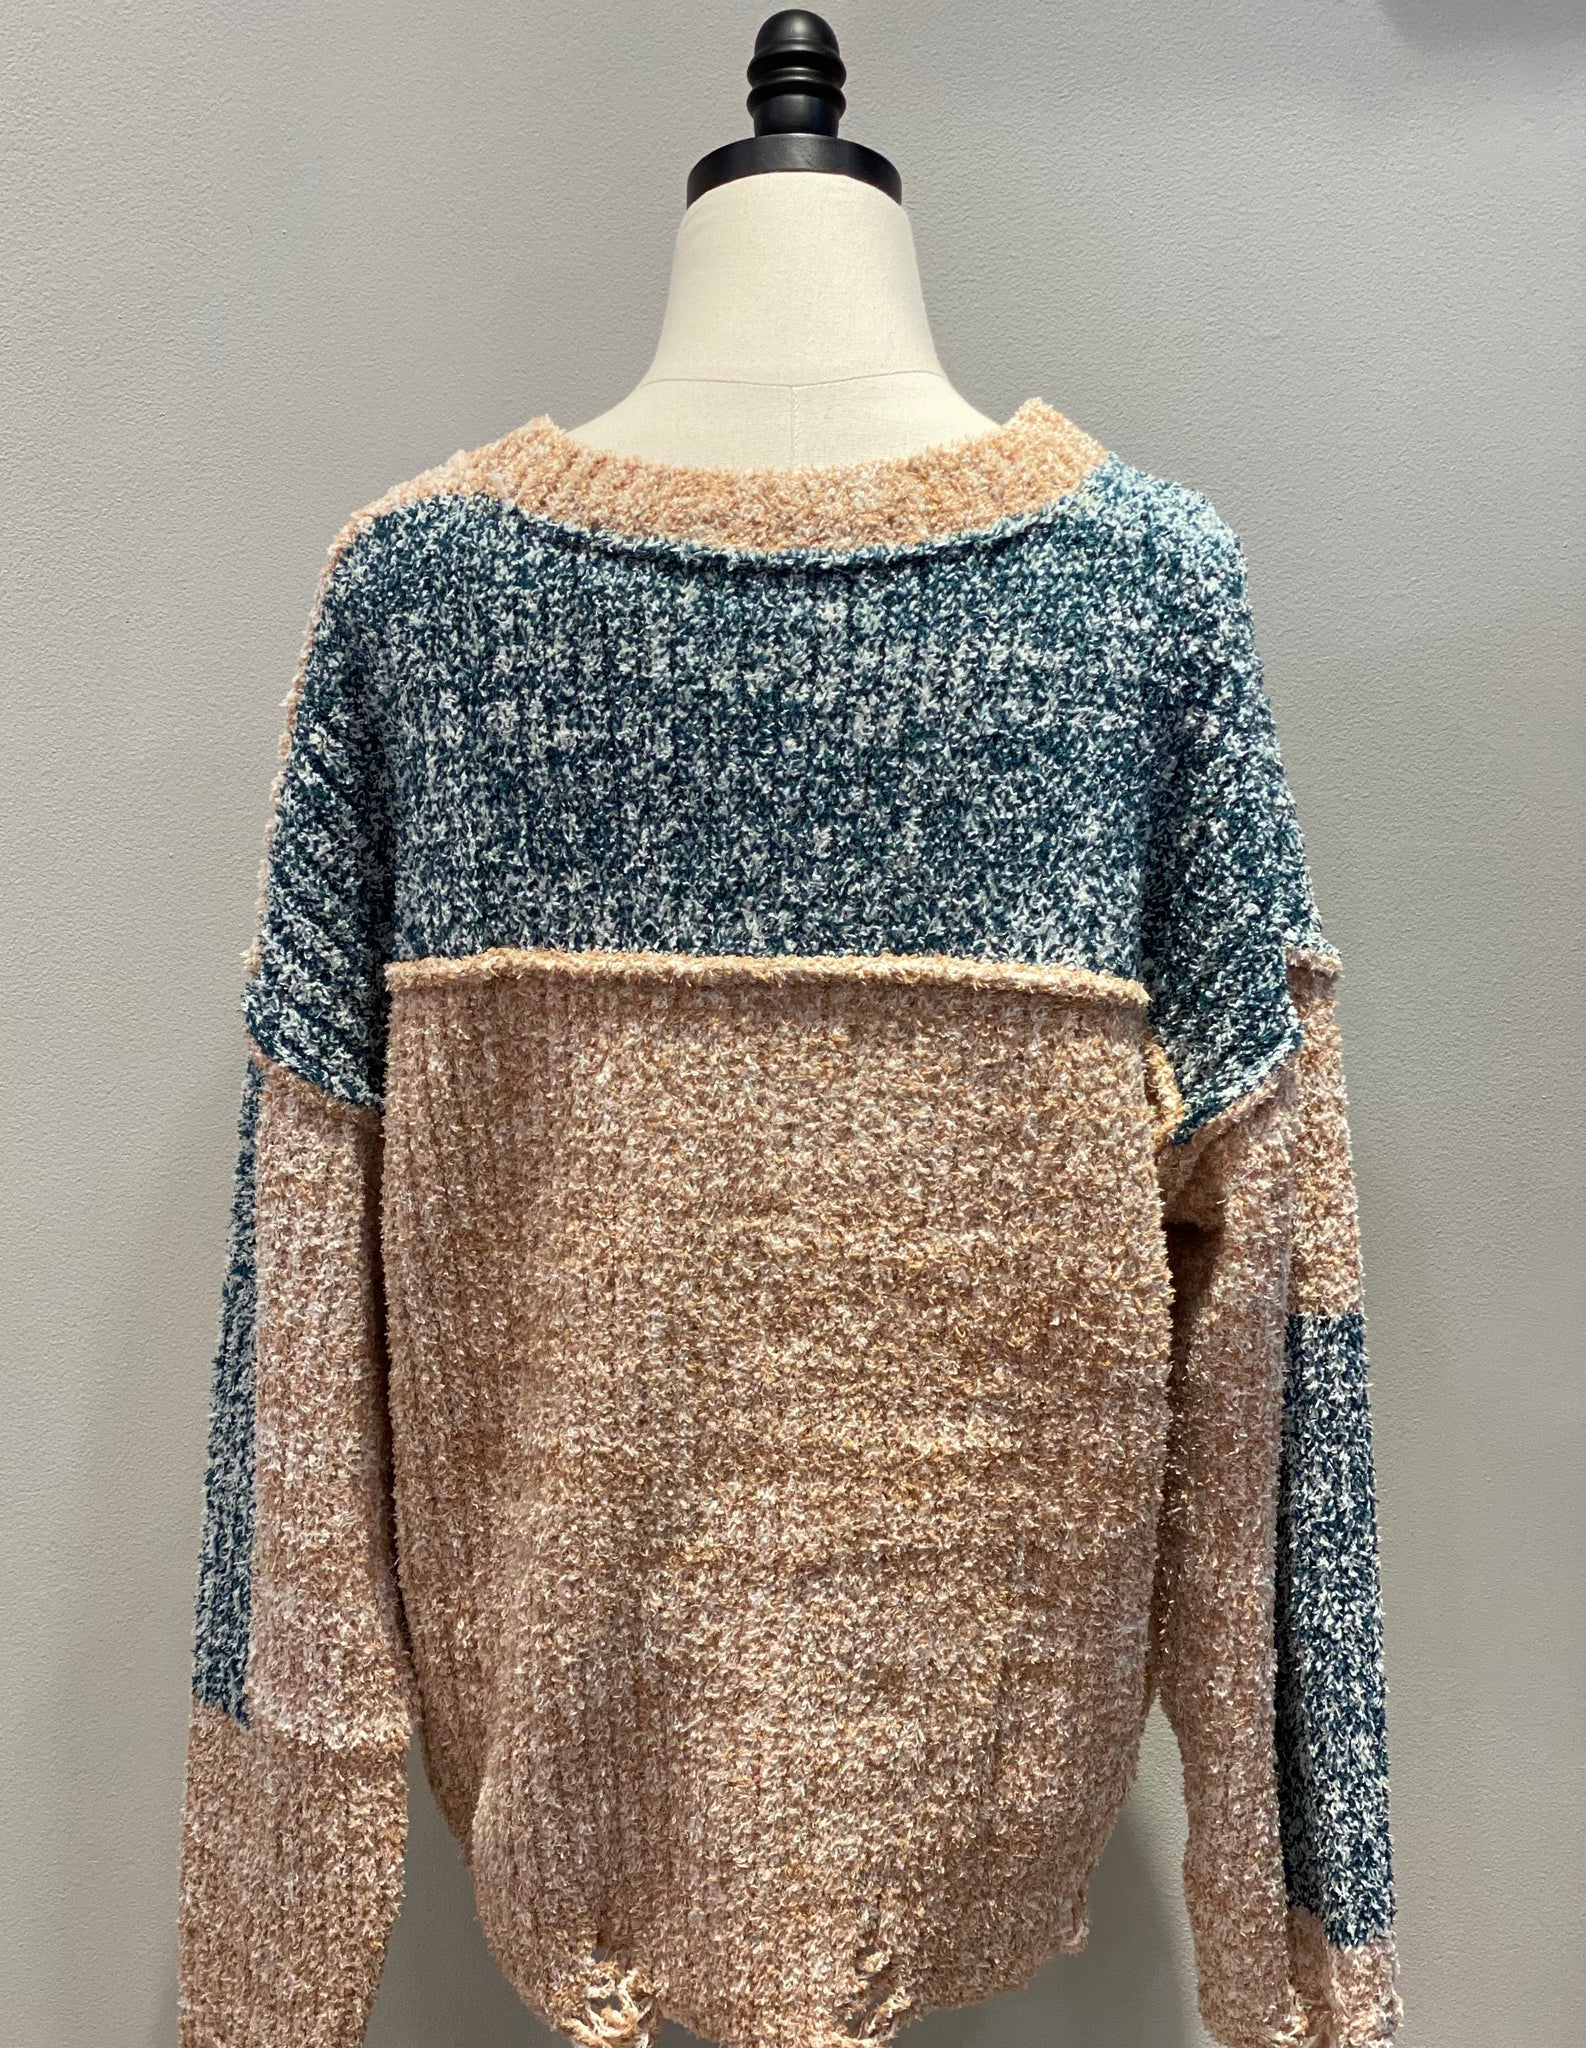 Berber Sweater